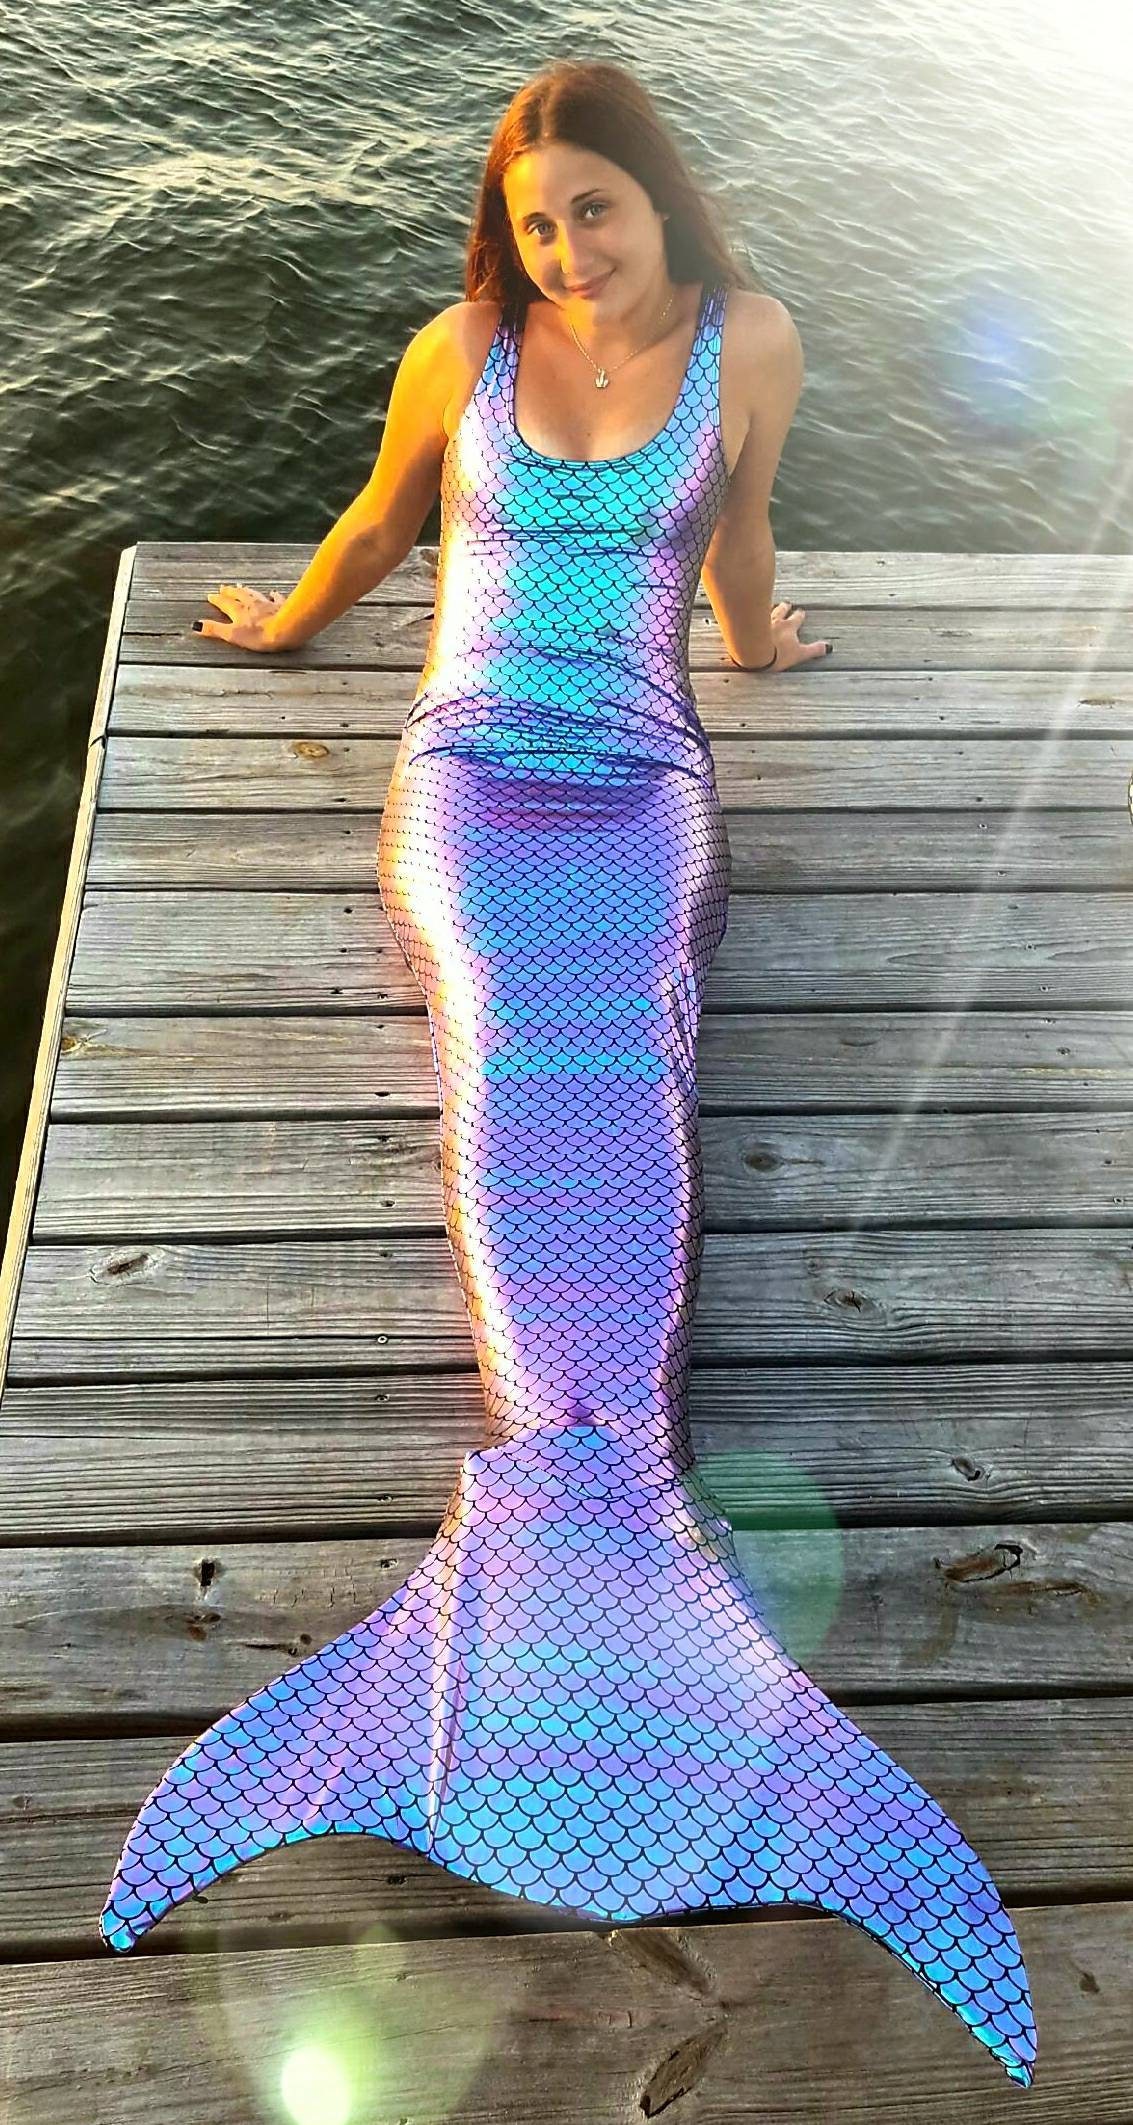 Swimmable Mermaid Tail With Monofin Swimsuit For Girls Women Bikini